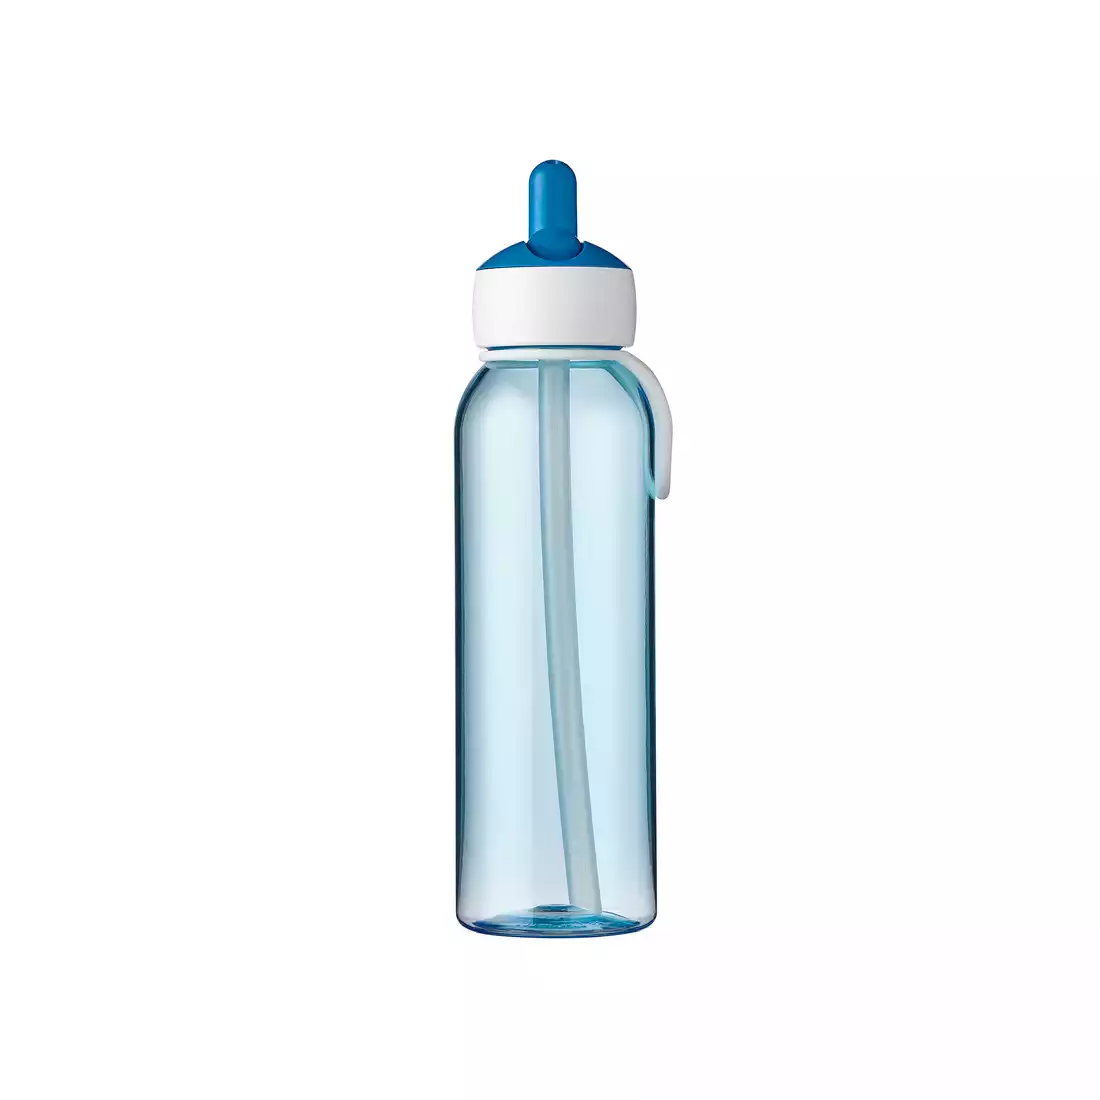 MEPAL FLIP-UP CAMPUS 500 ml láhev na vodu, modrý